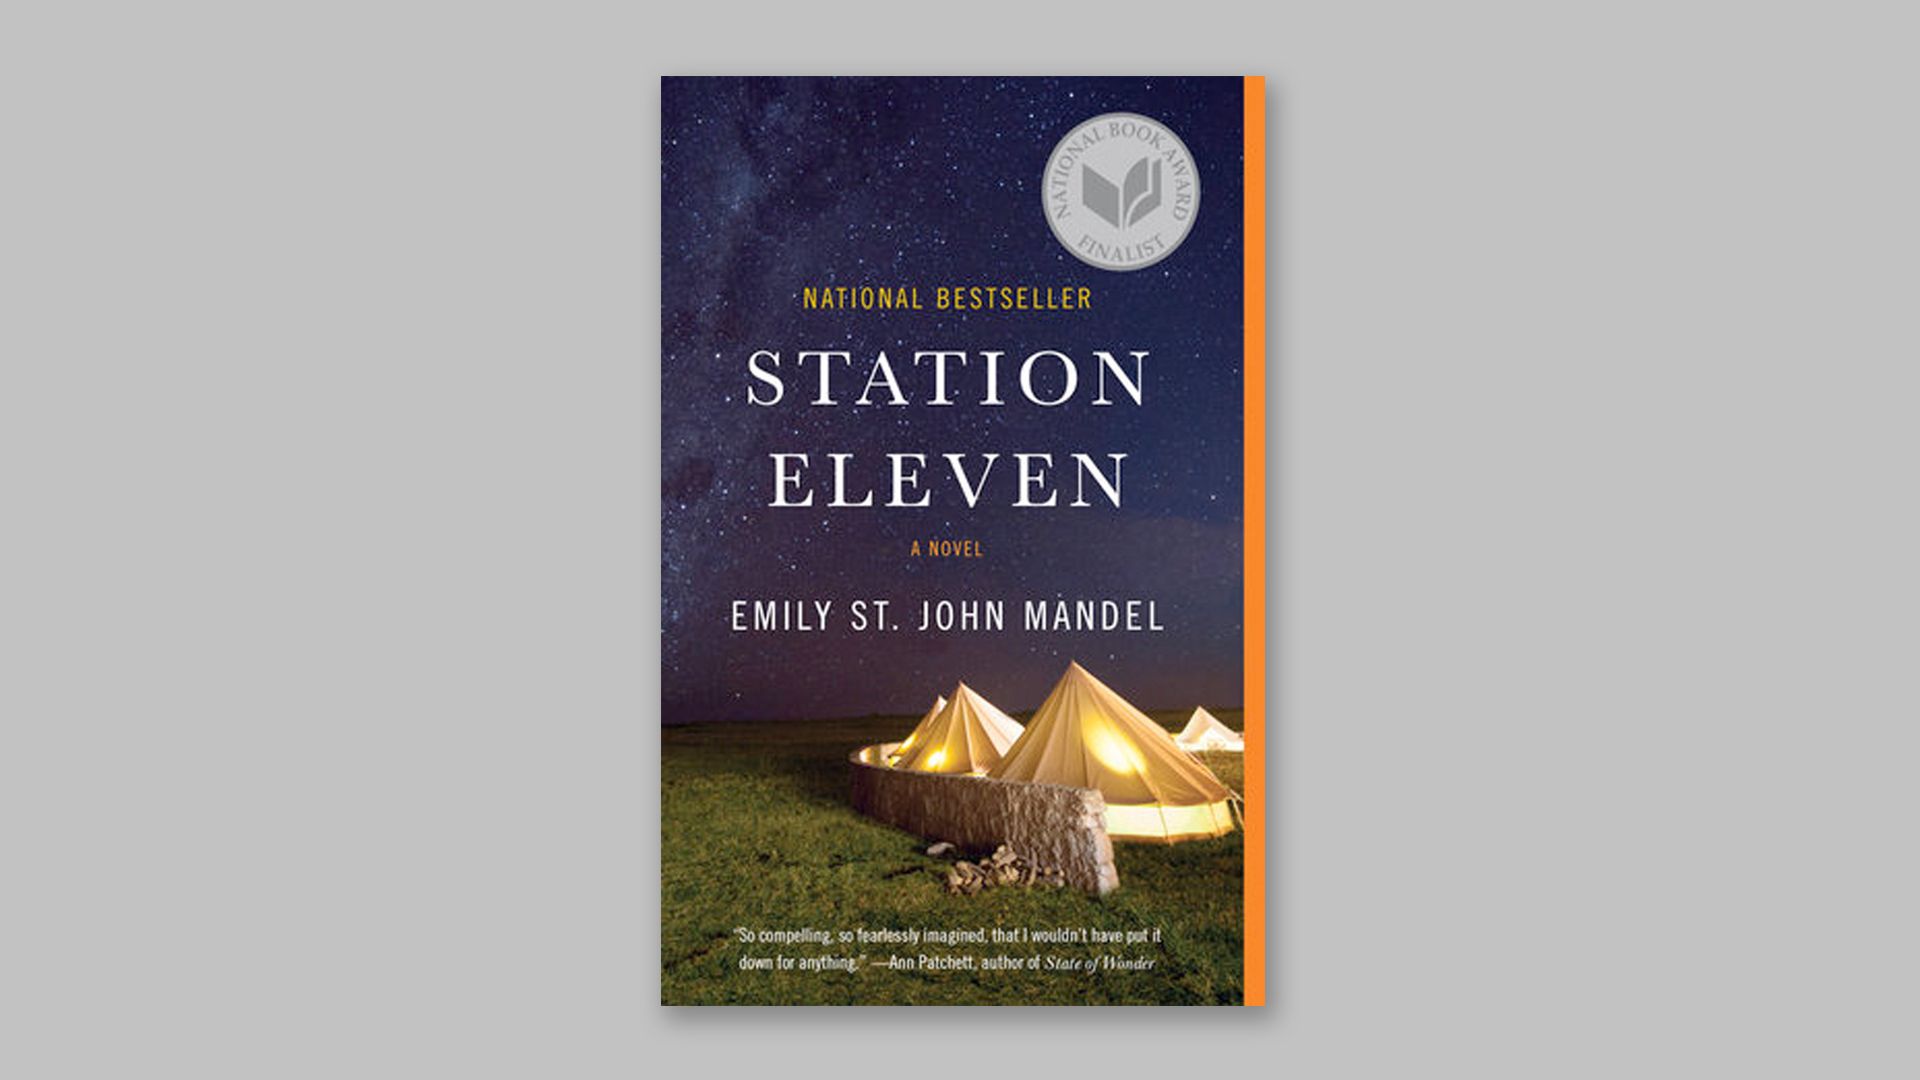 Cover image of the novel "Station Eleven."